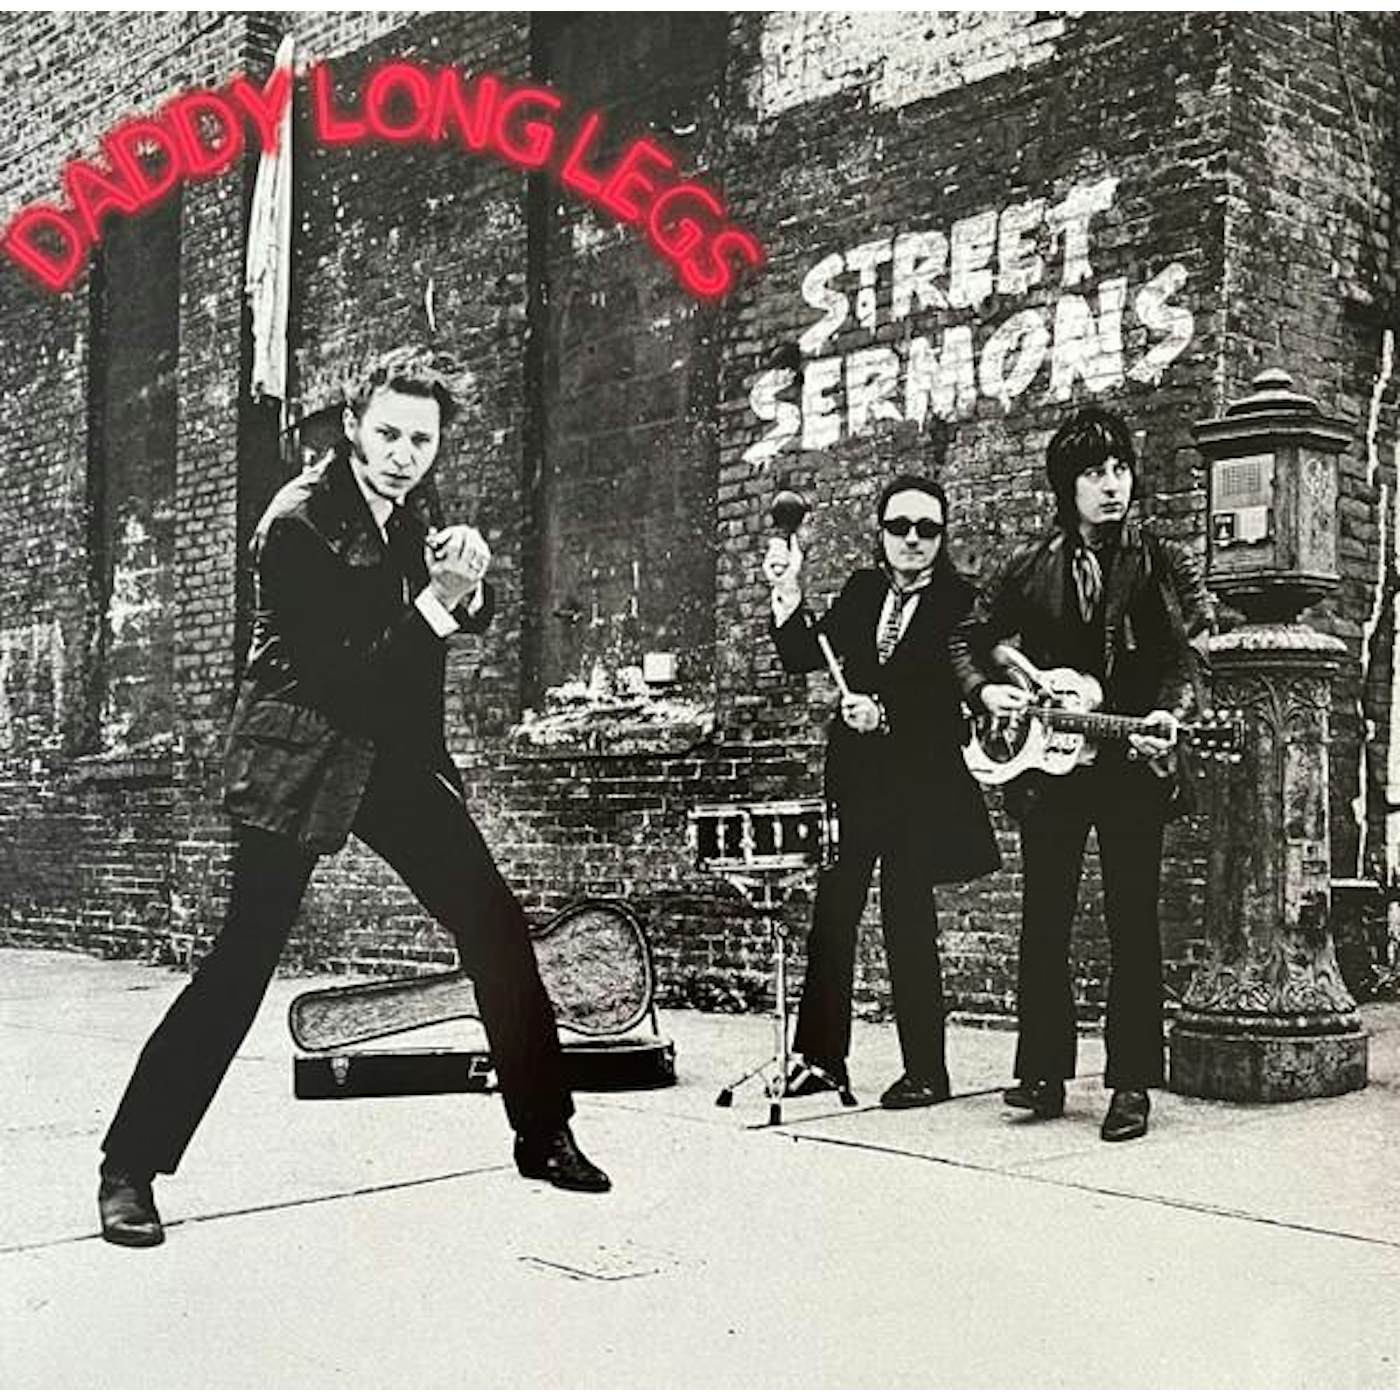 DADDY LONG LEGS Street Sermons Vinyl Record